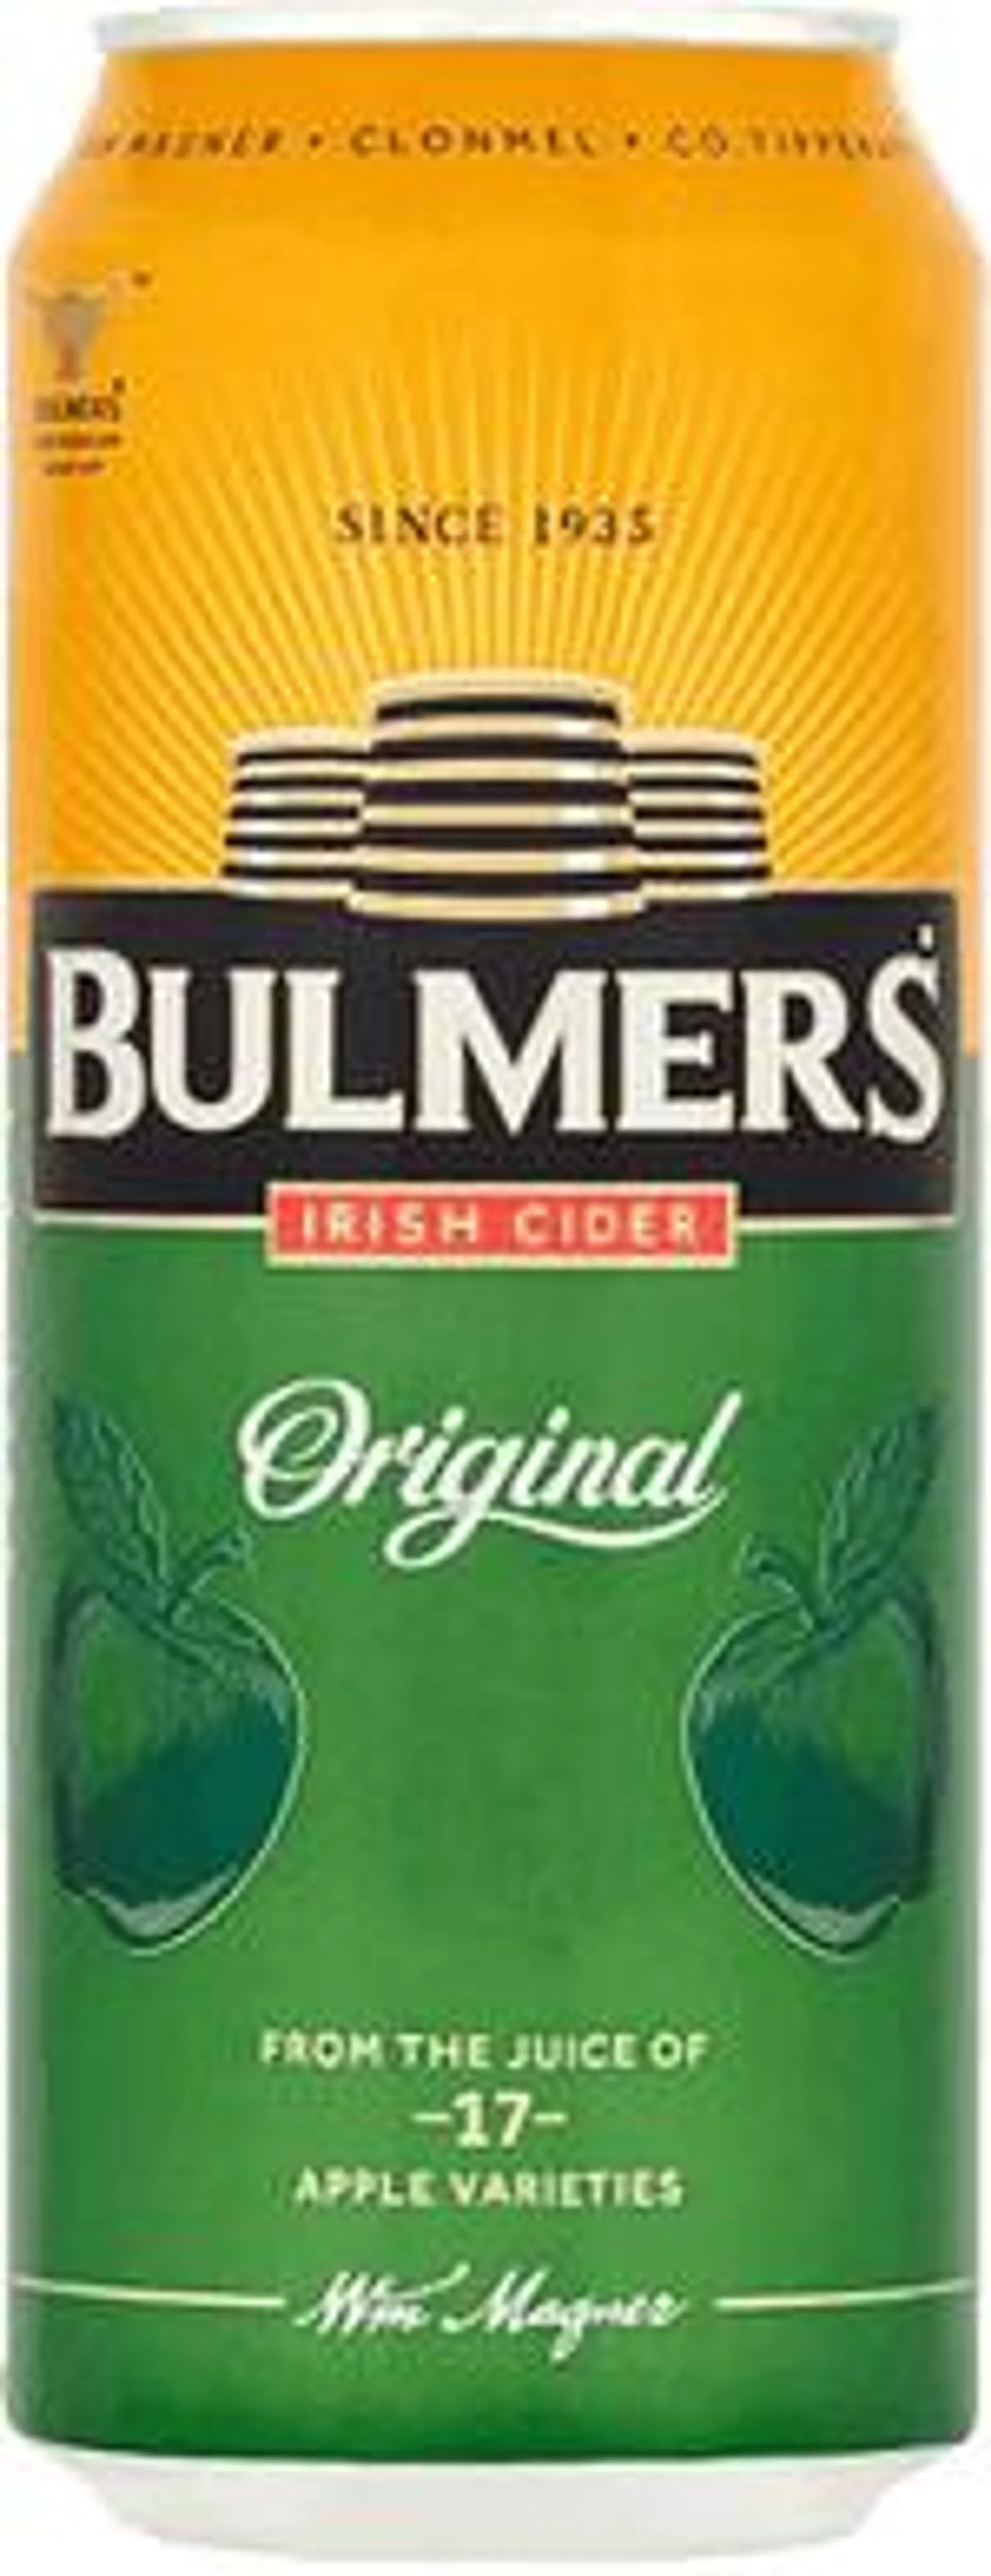 Bulmers Original Irish Cider 24 Pack (50cl Cans)